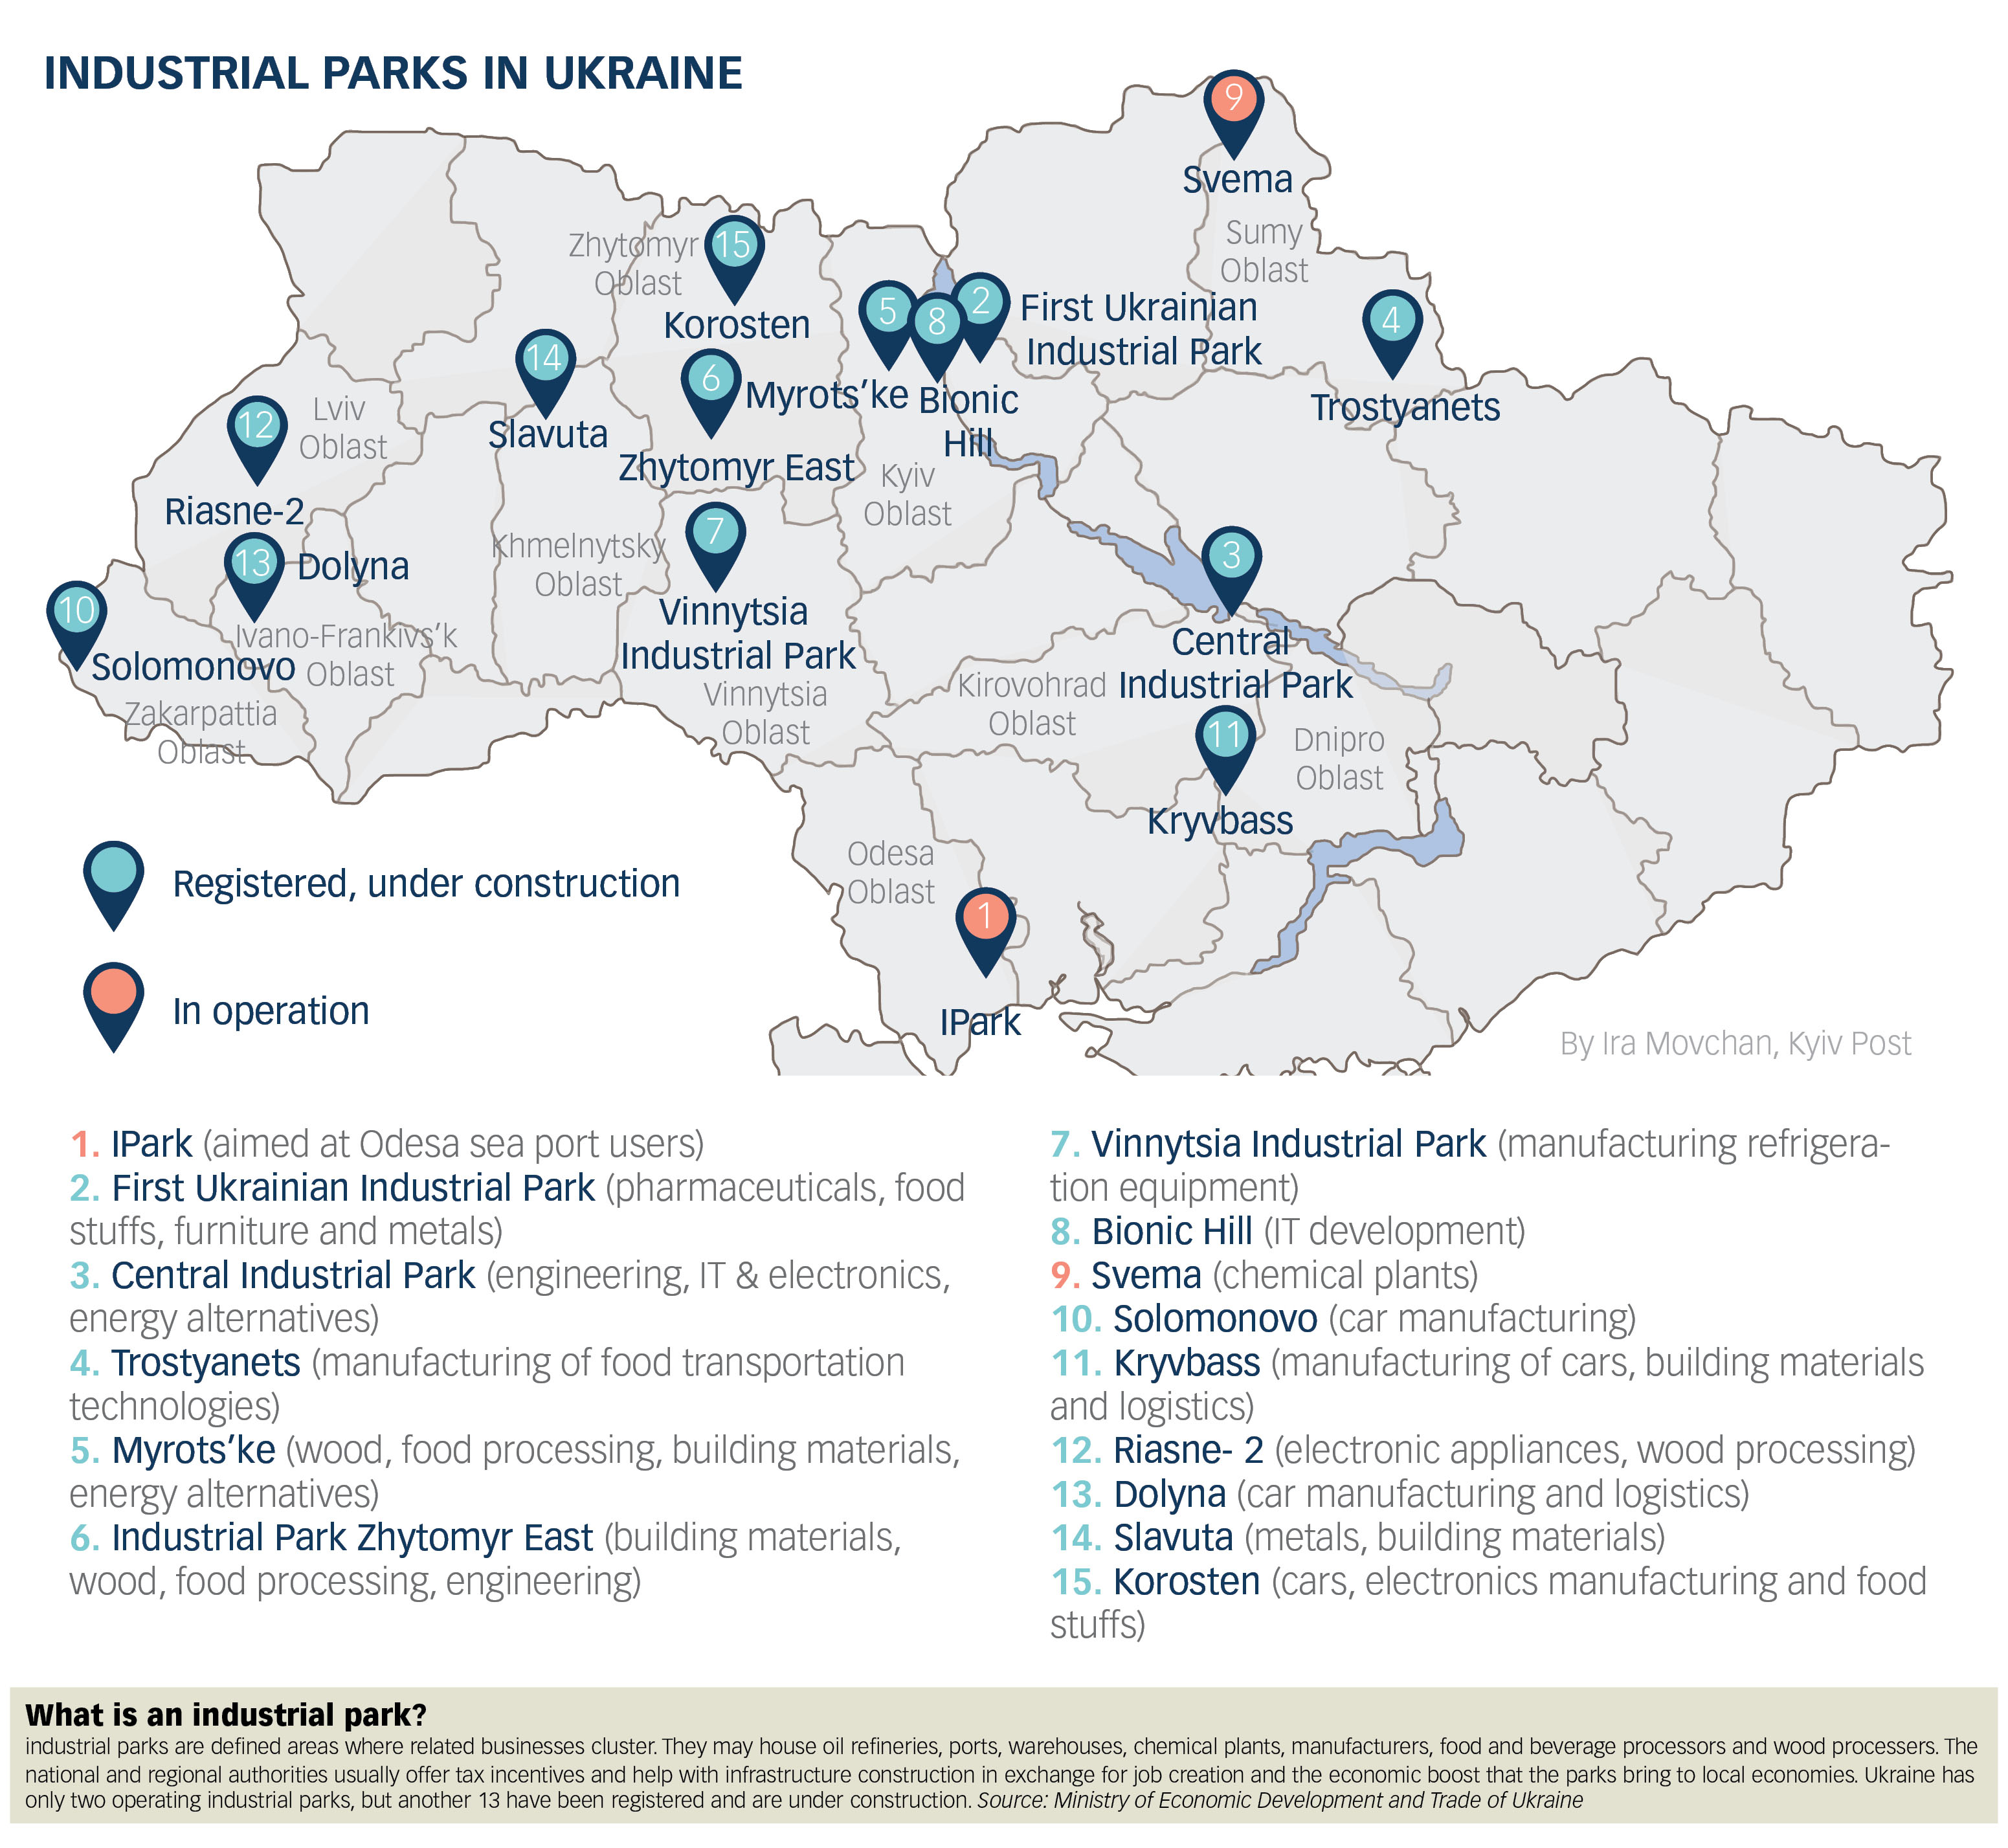 State registered industrial parks in Ukraine as of November 2016